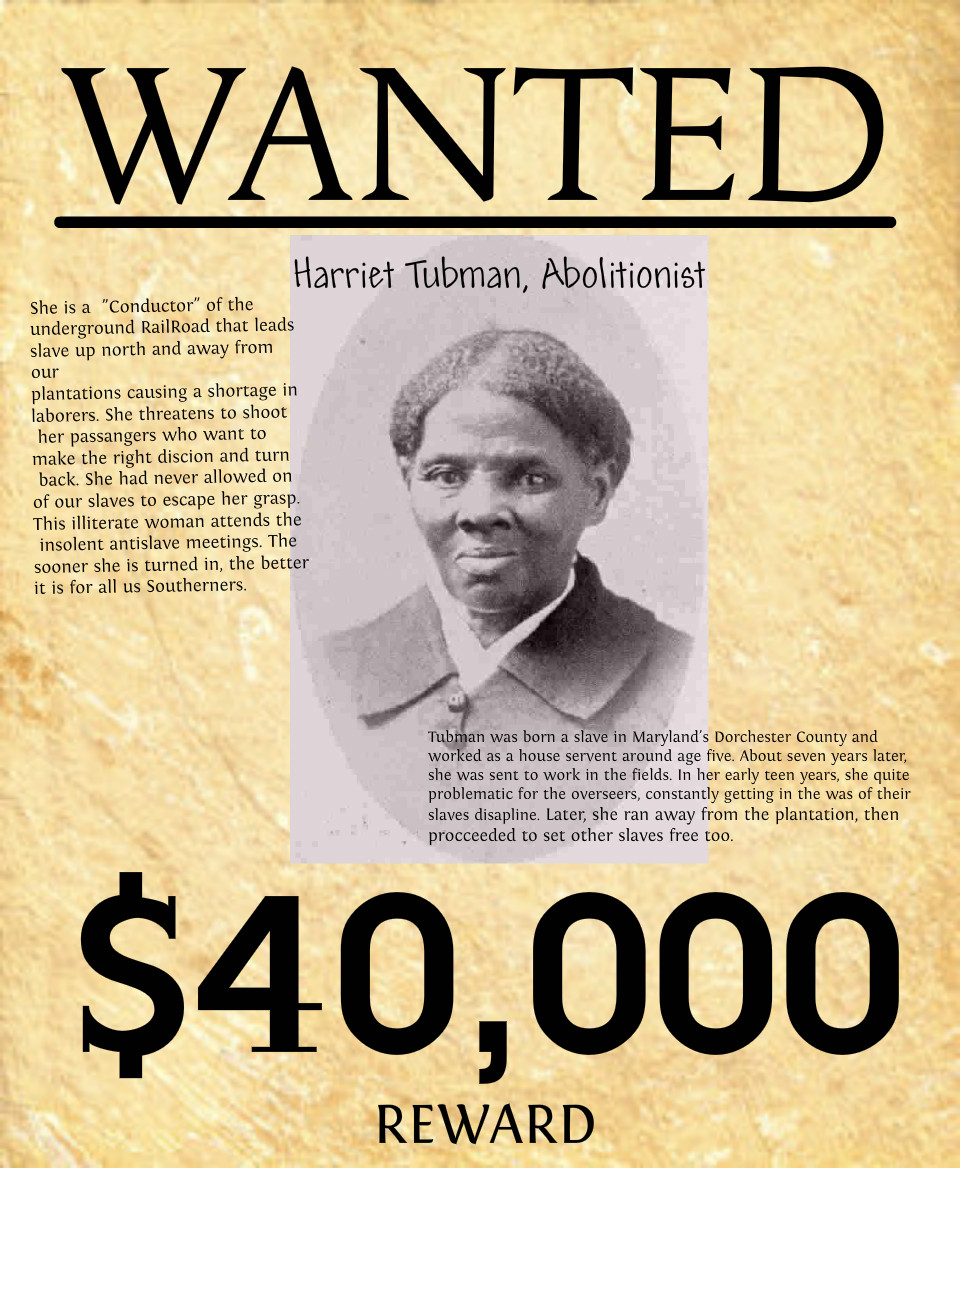 Harriet Tubman Adult Life 109